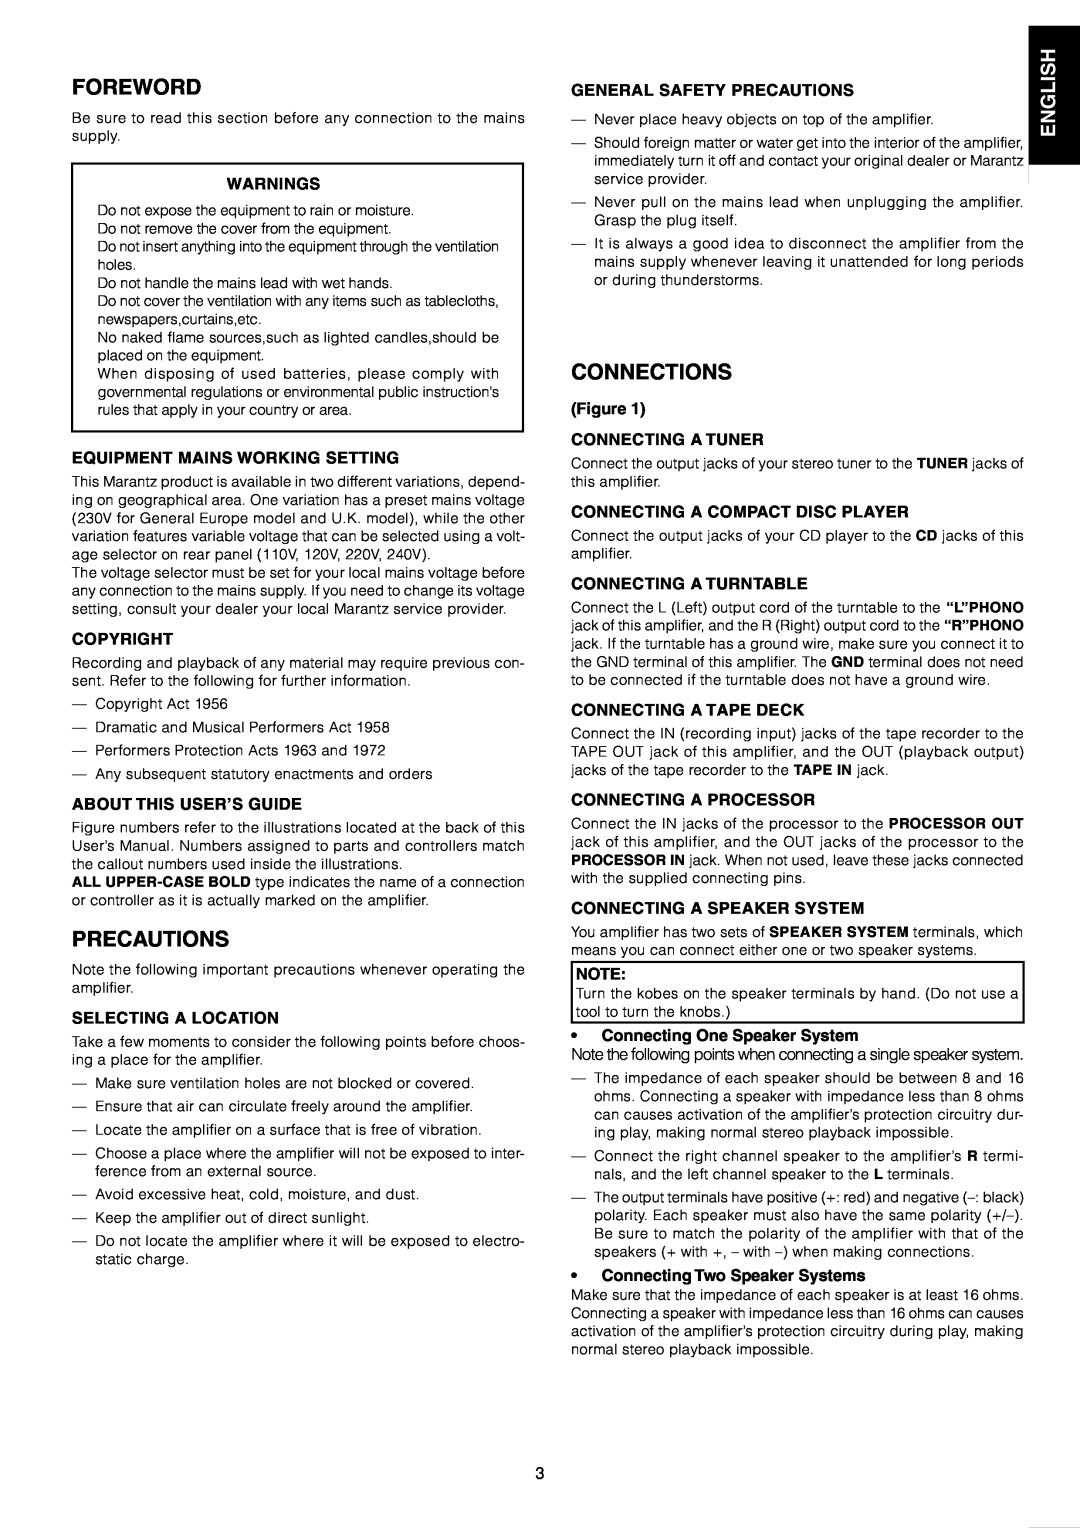 Marantz PM7200 manual Foreword, Precautions, Connections, Dansk 